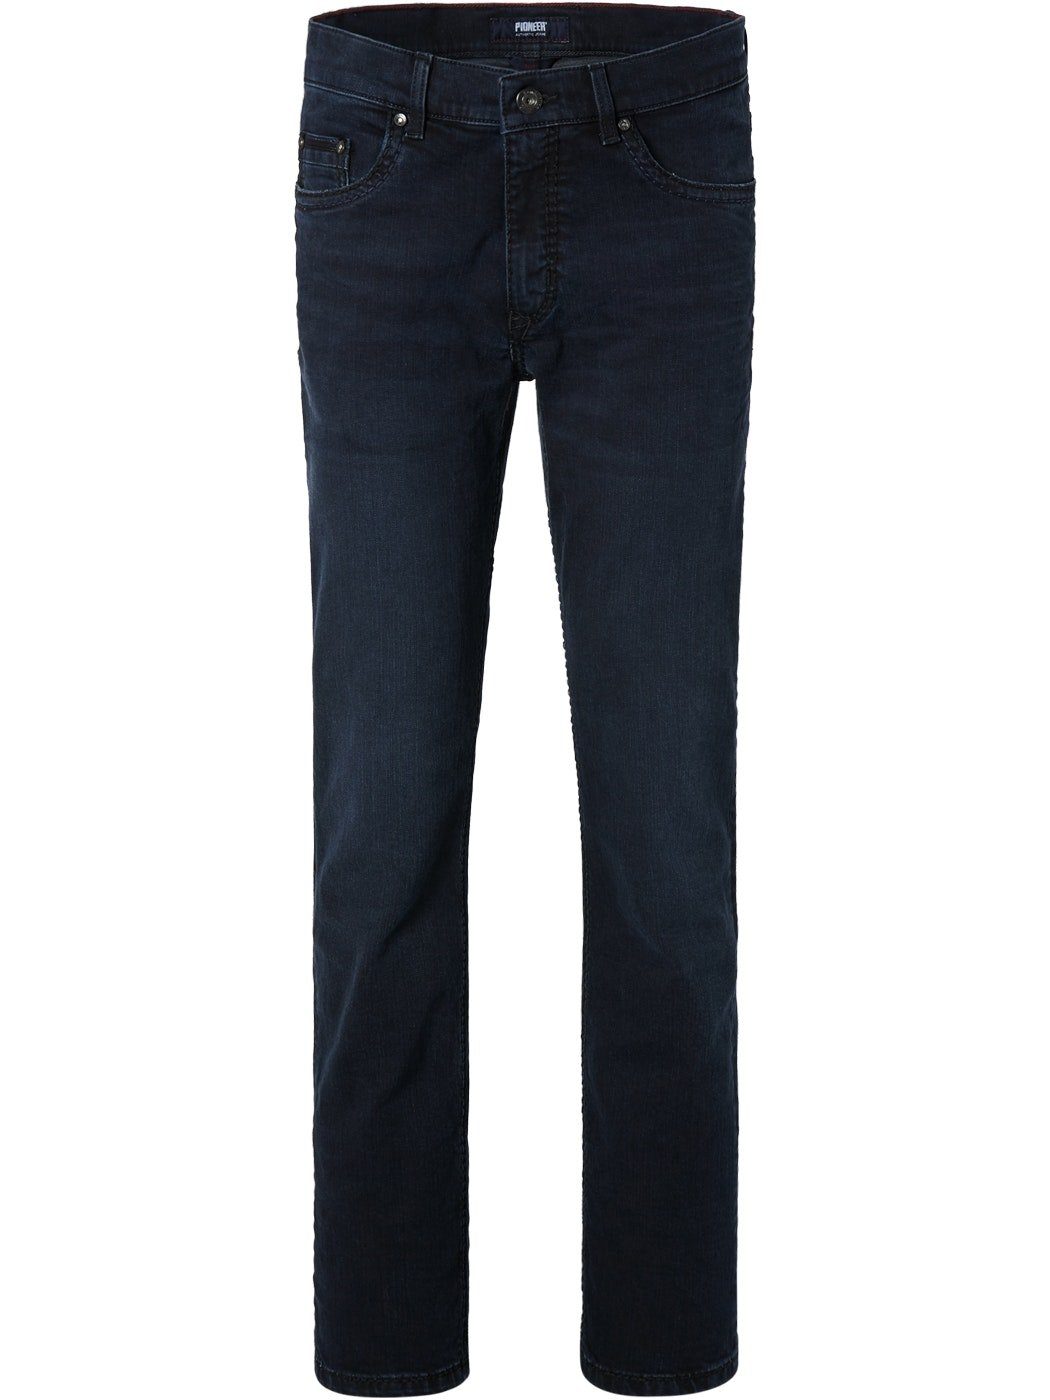 Pioneer Authentic Jeans 5-Pocket-Jeans PIONEER 9761.422 RANDO used HANDCRAFTED 1654 - dark